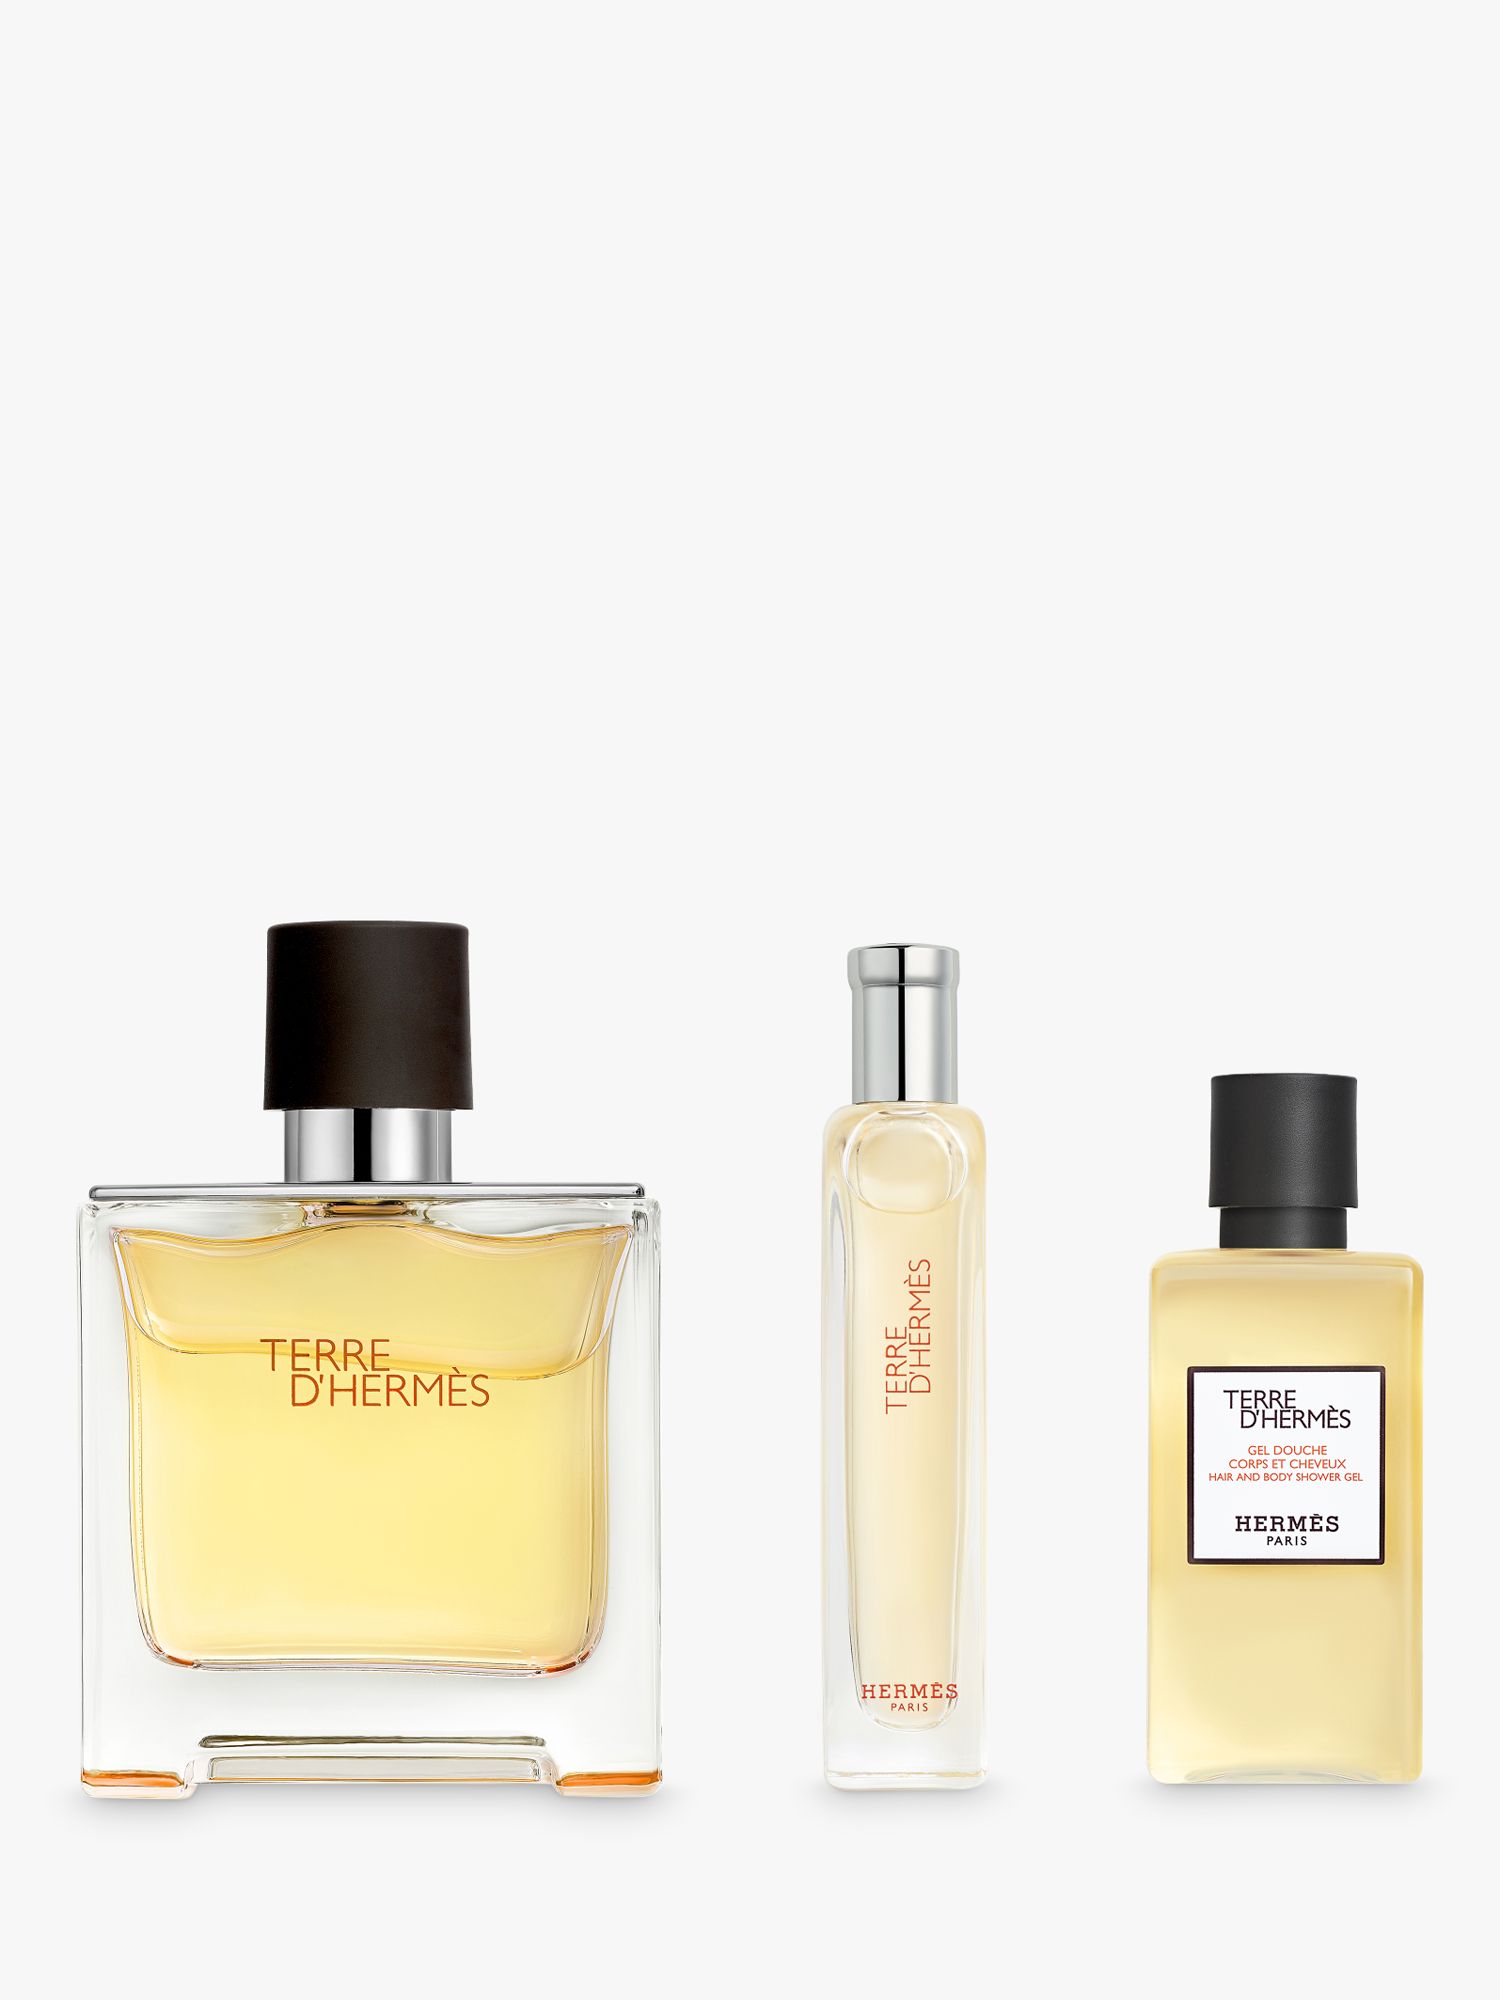 Hermès Terre d’Hermes Pure Parfum 75ml Father's Day Fragrance Gift Set